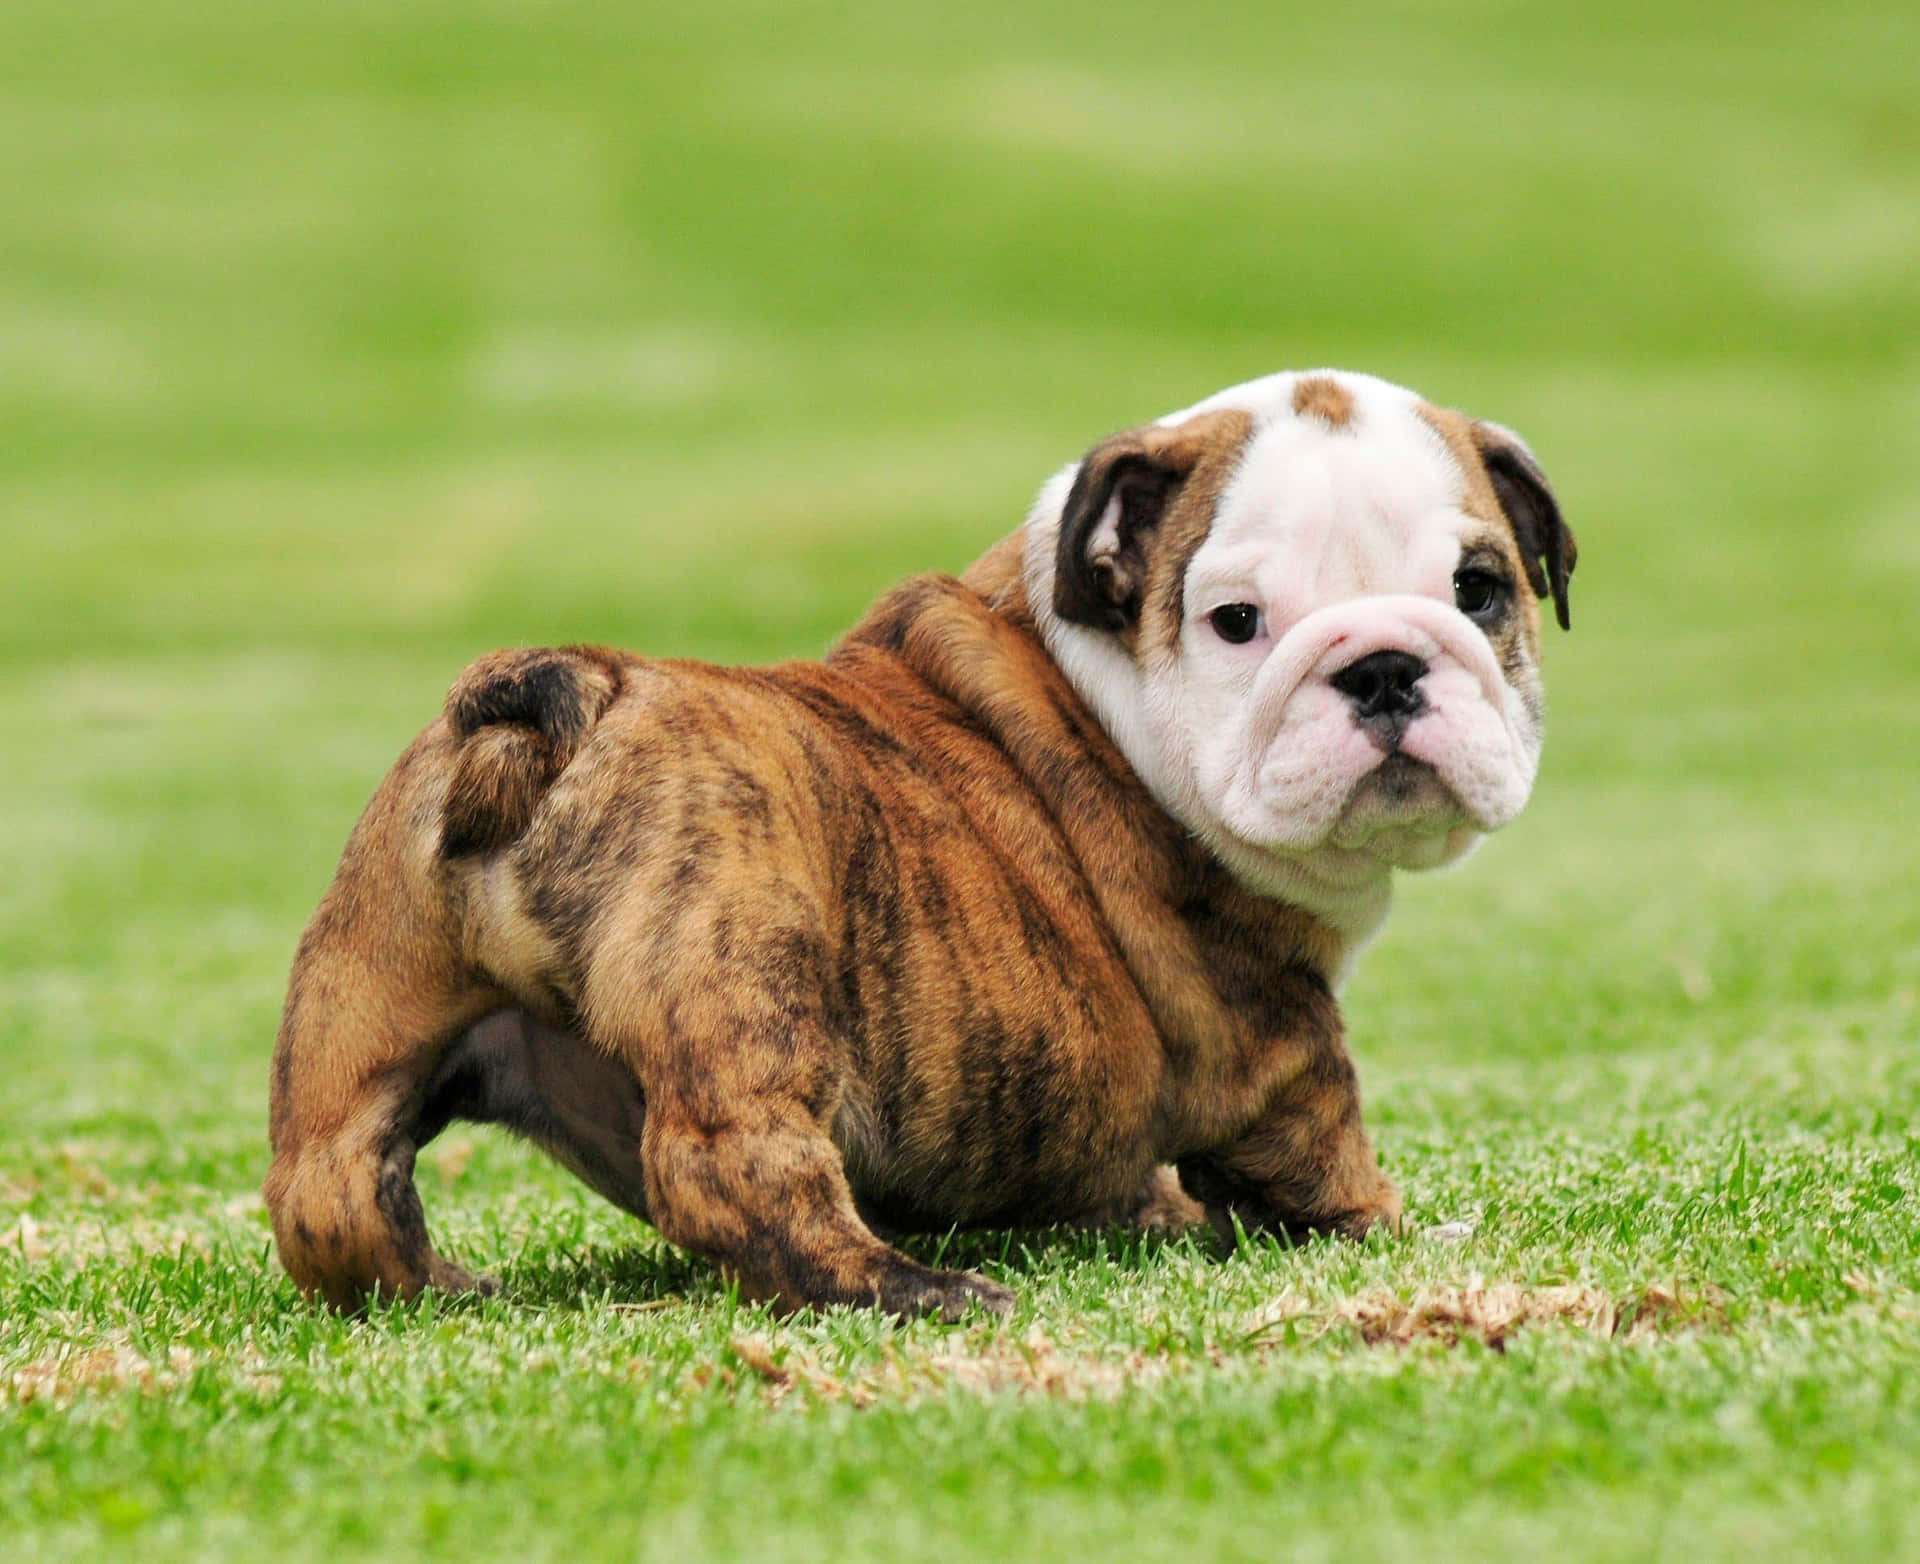 Cute Running Puppy Bulldog Picture